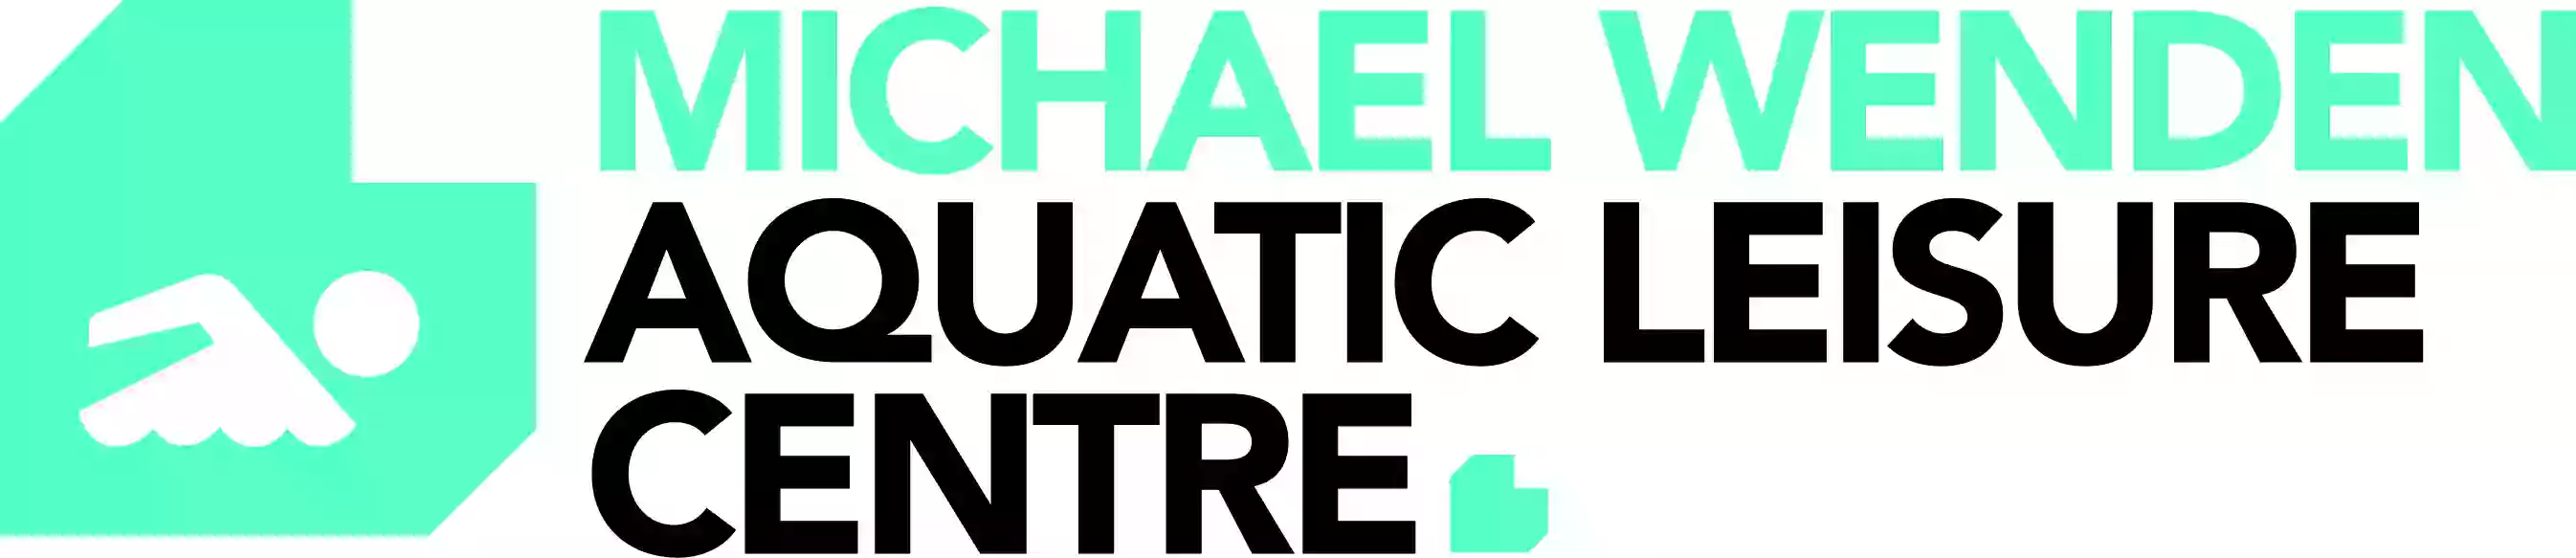 Michael Wenden Aquatic Leisure Centre